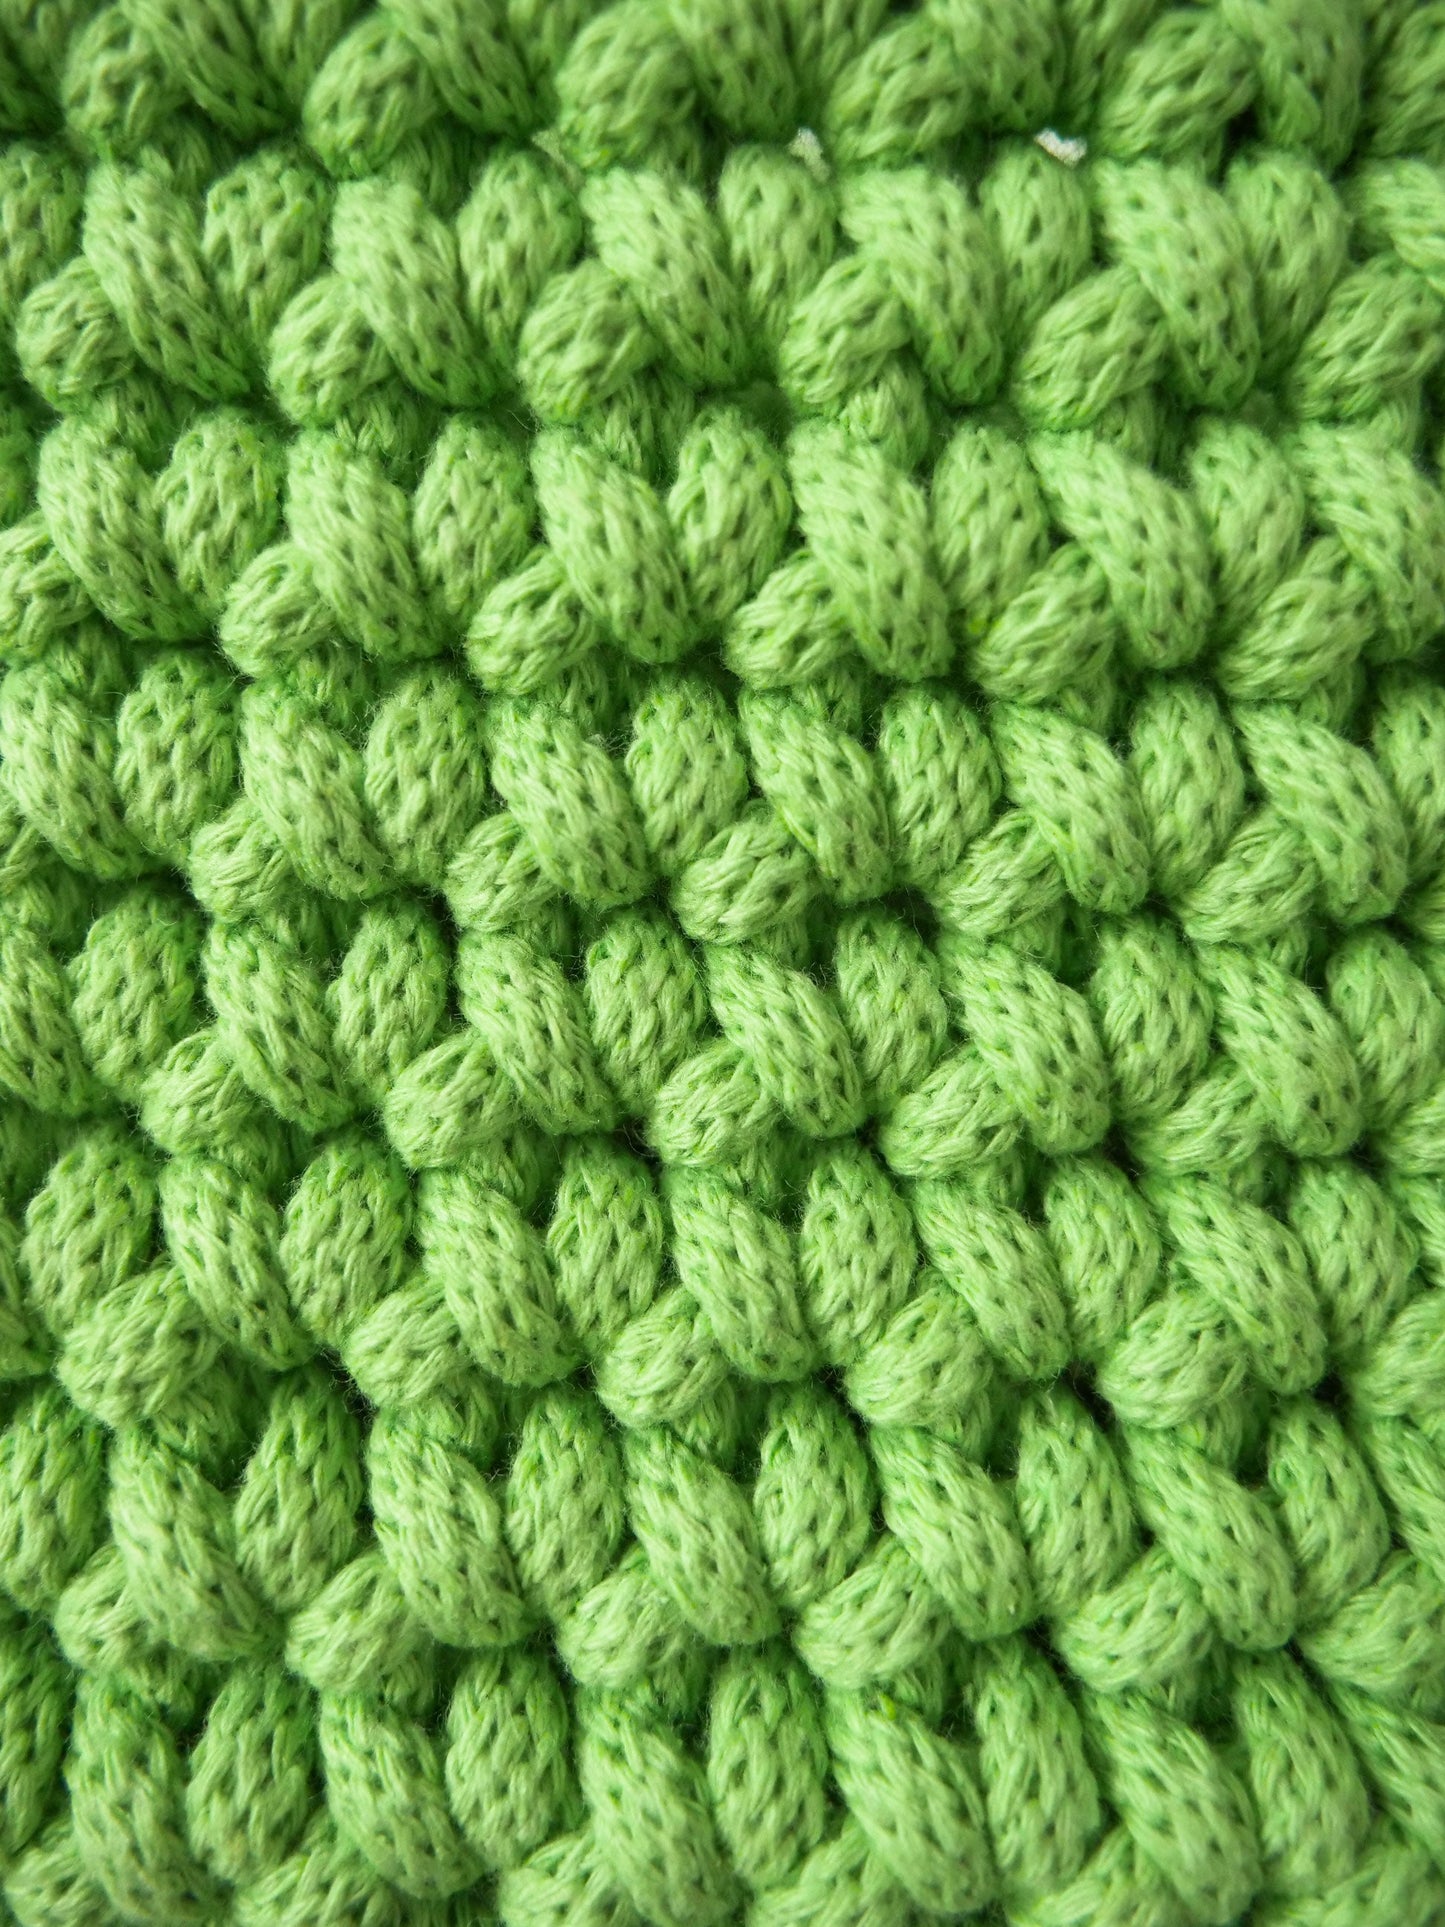 Crochet Cord Bag Adjustable Strap